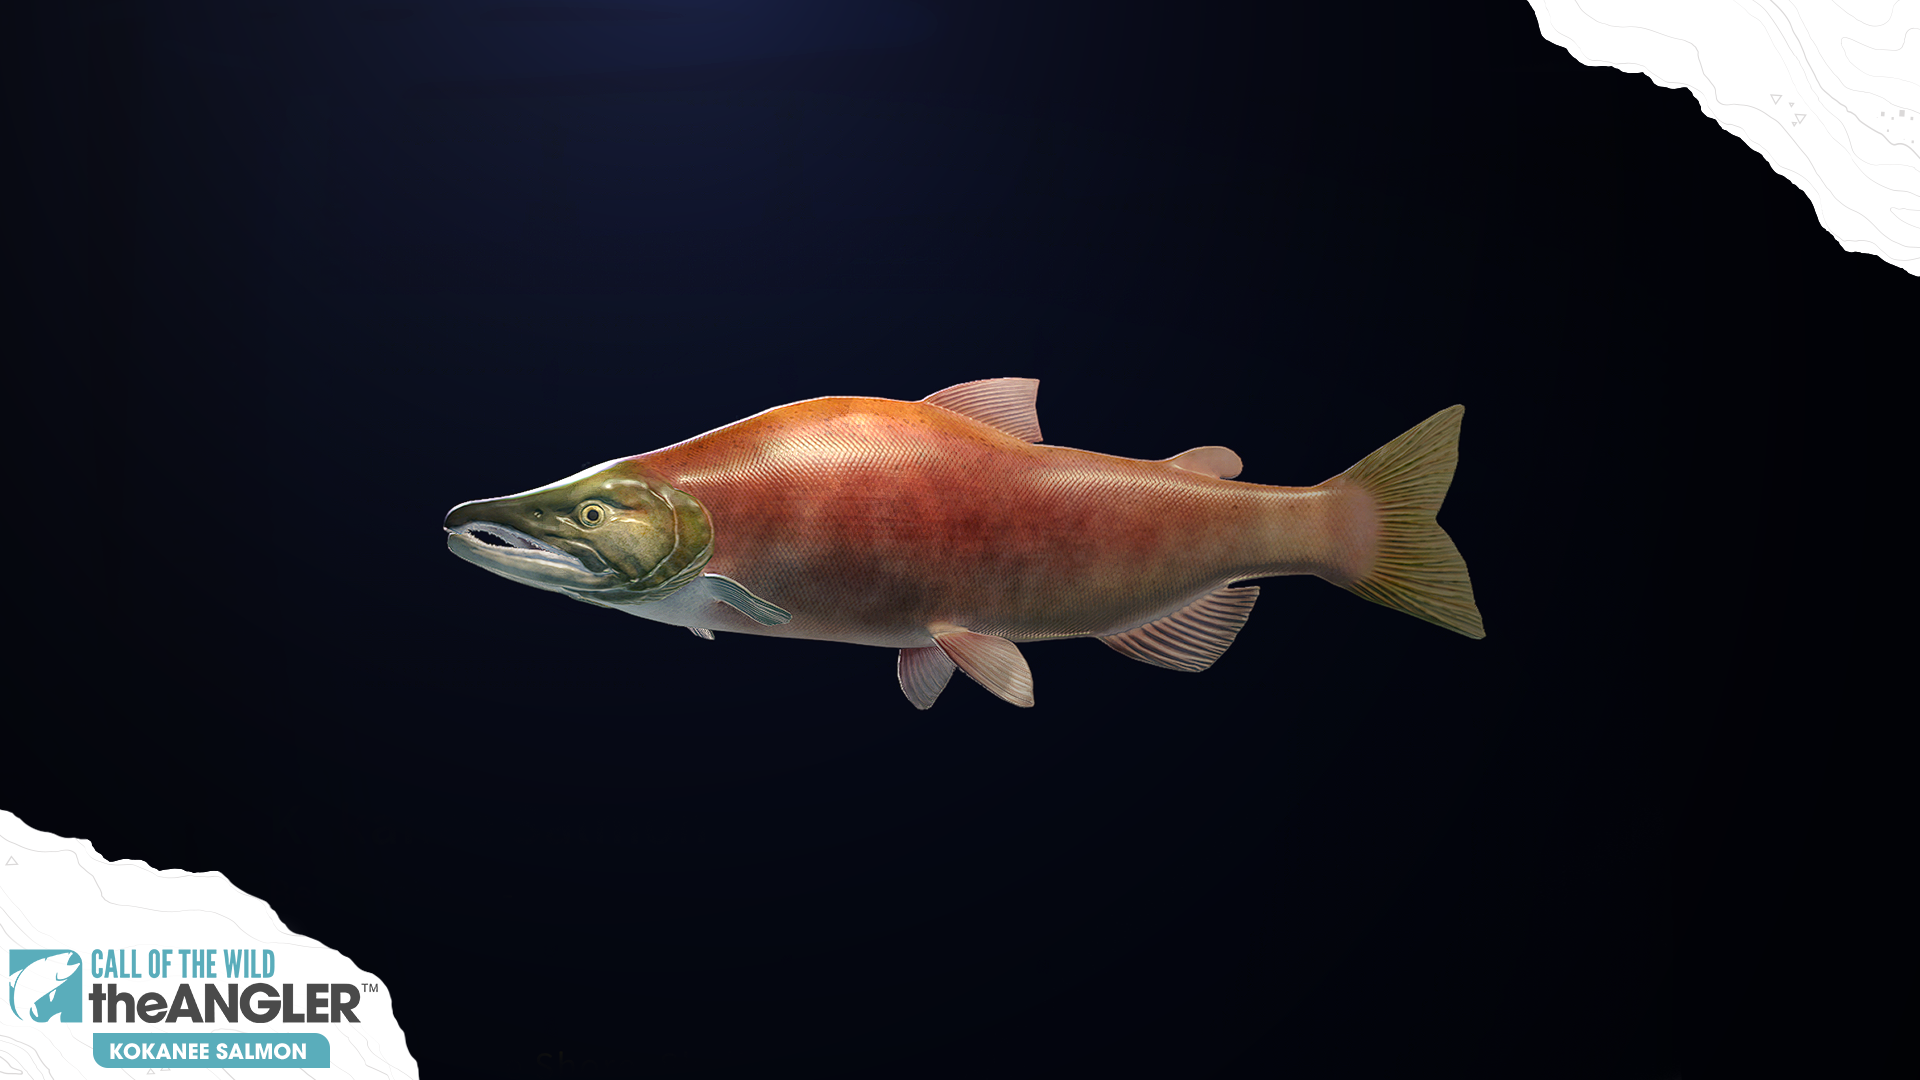 An image of the fish species, Kokanee Salmon.